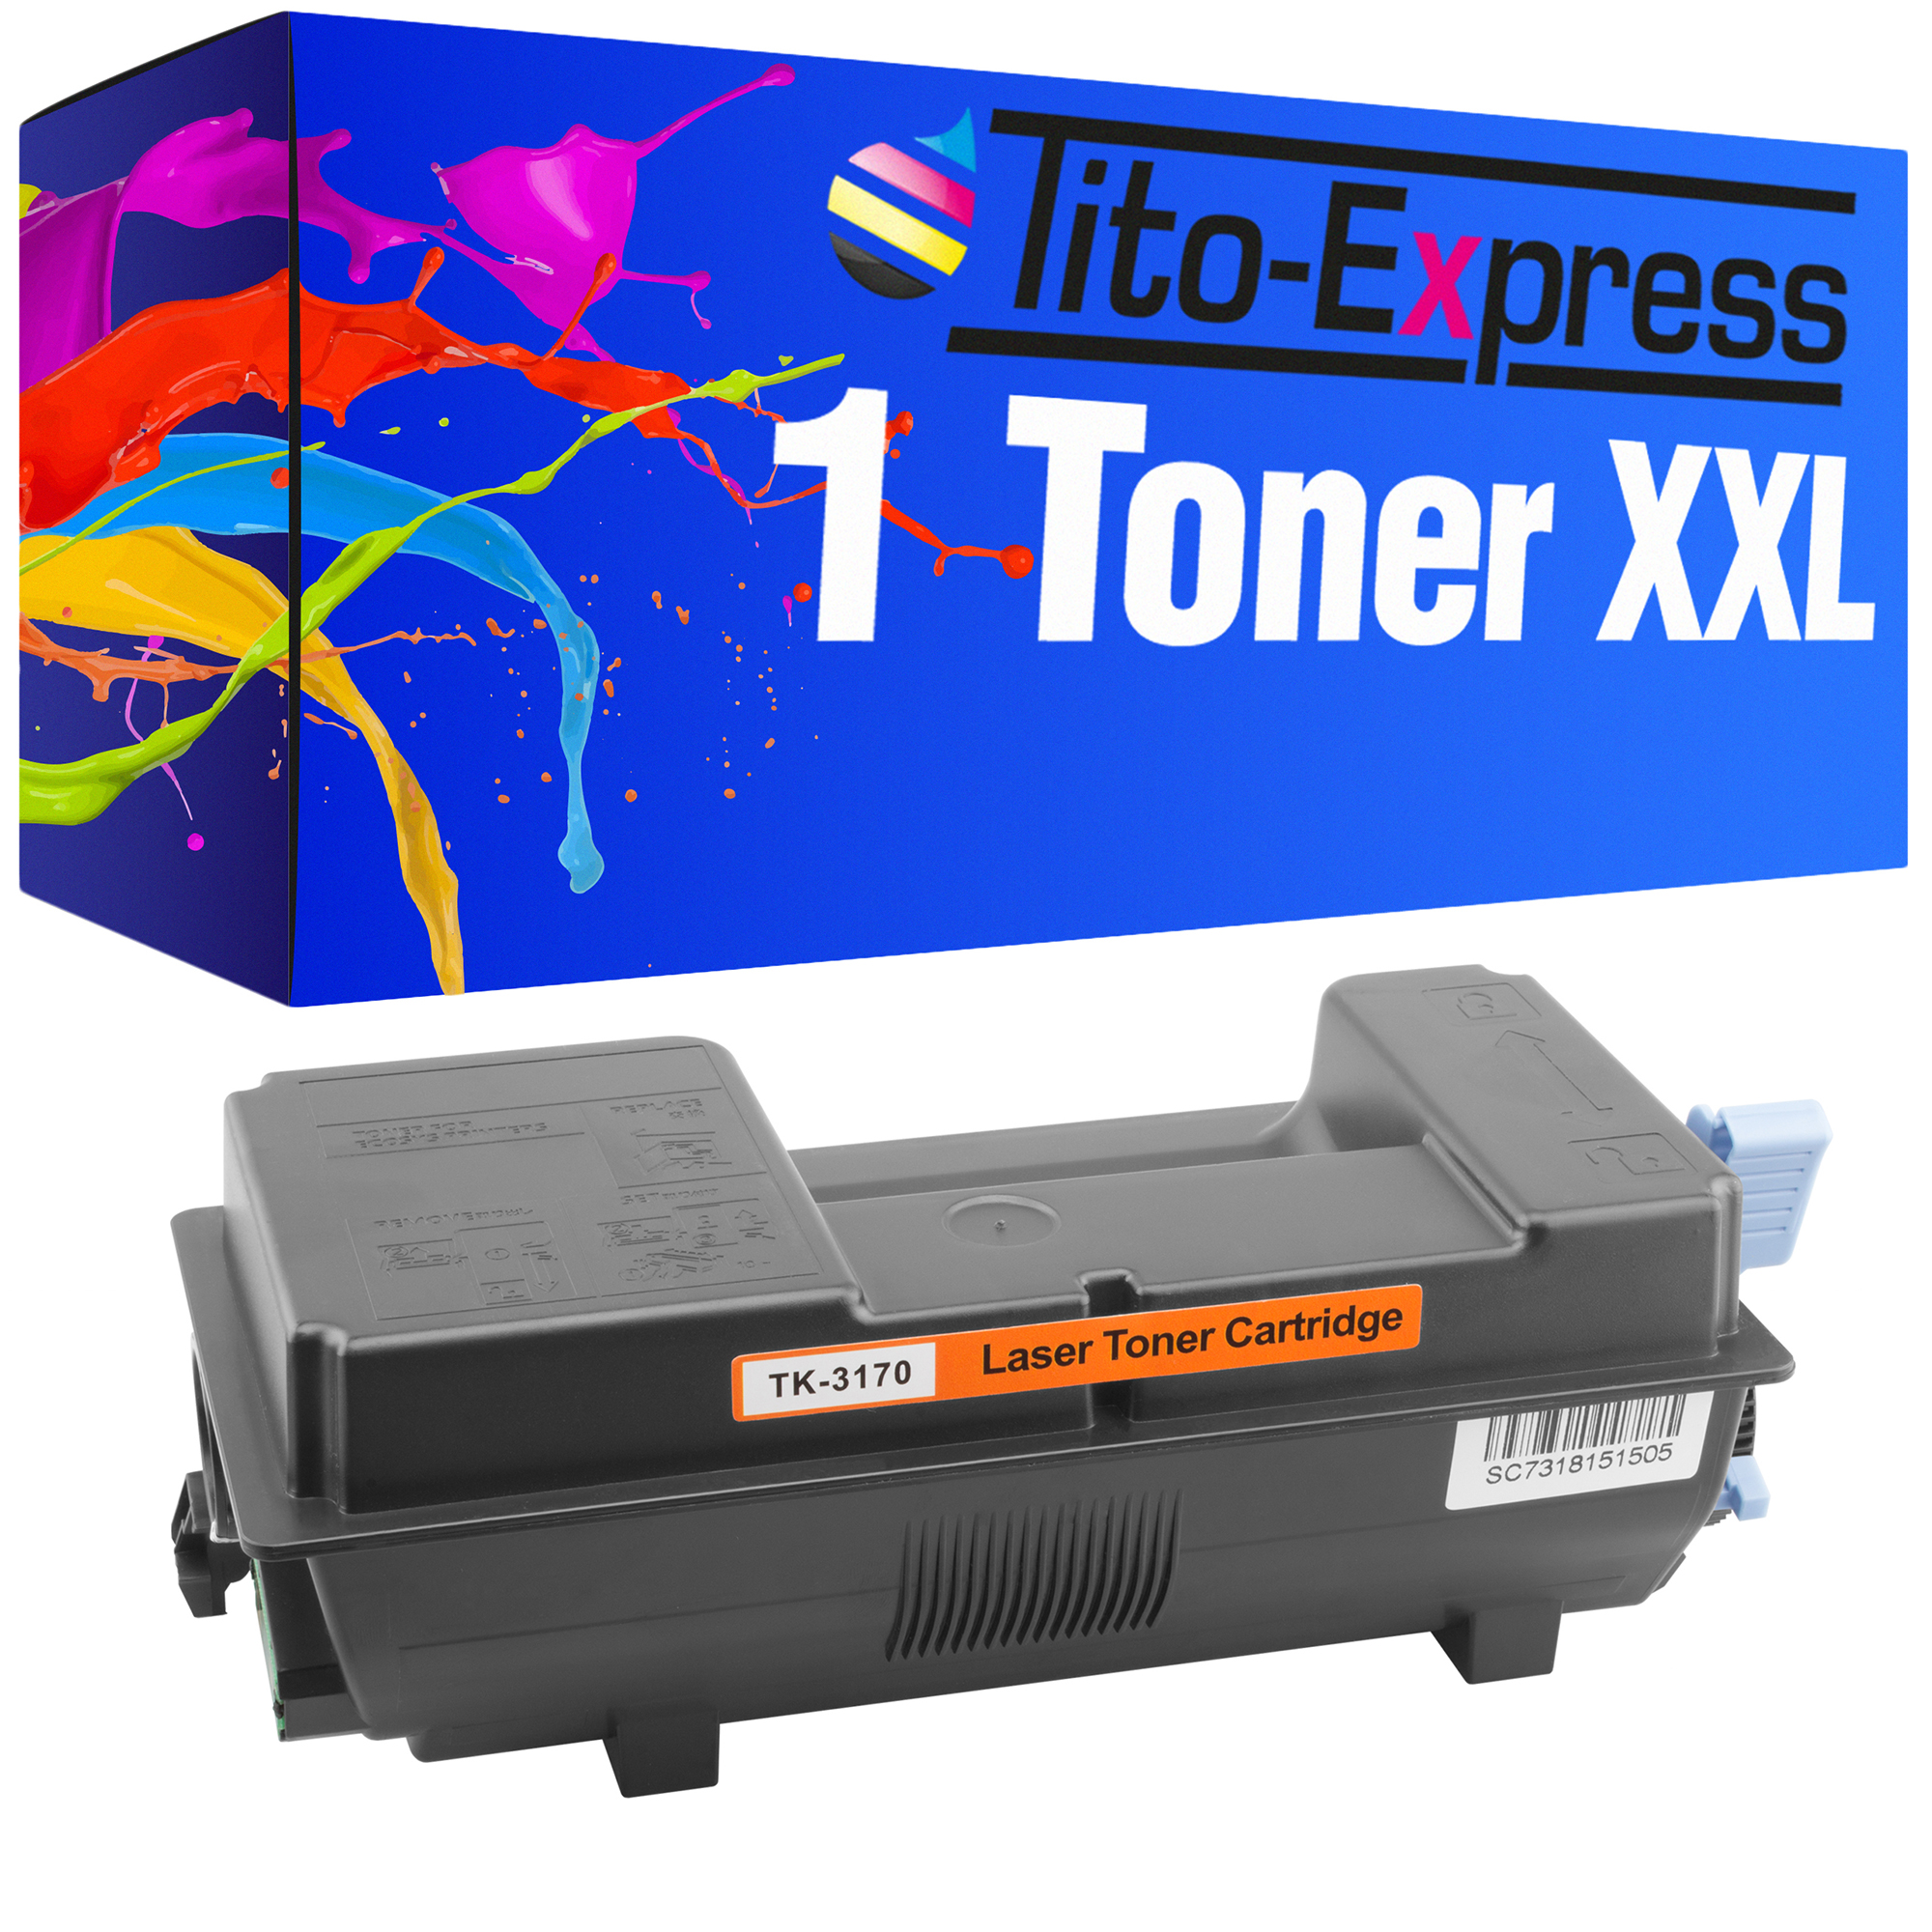 (1T02T80NL0) Kyocera TK-3170 PLATINUMSERIE TITO-EXPRESS black Toner ersetzt 1 Toner